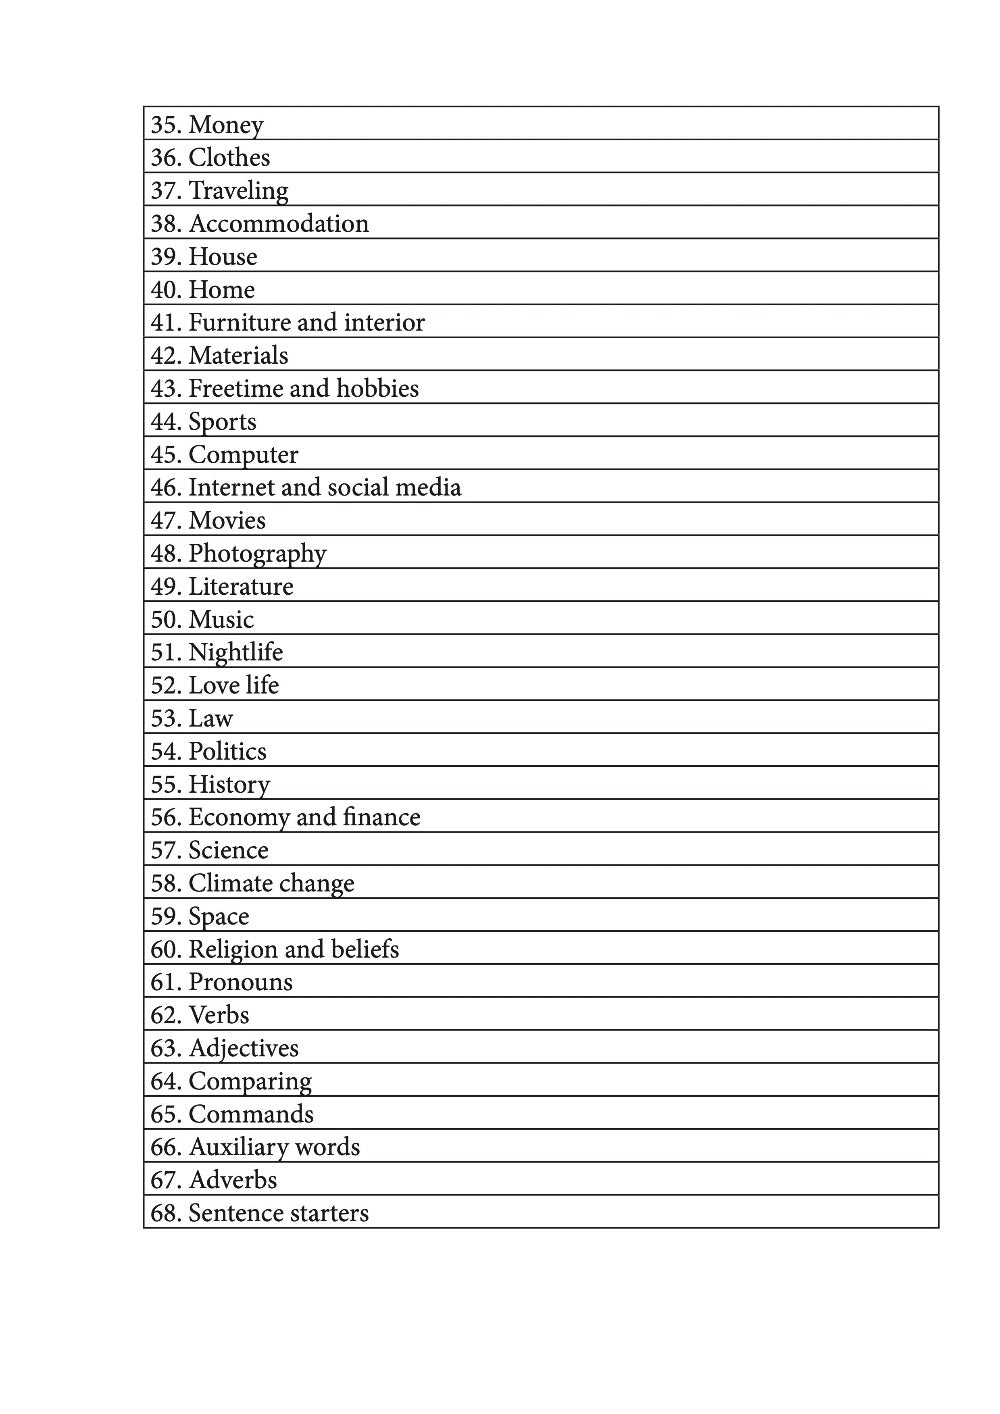 Kikuyu language learning notebook contents page 2